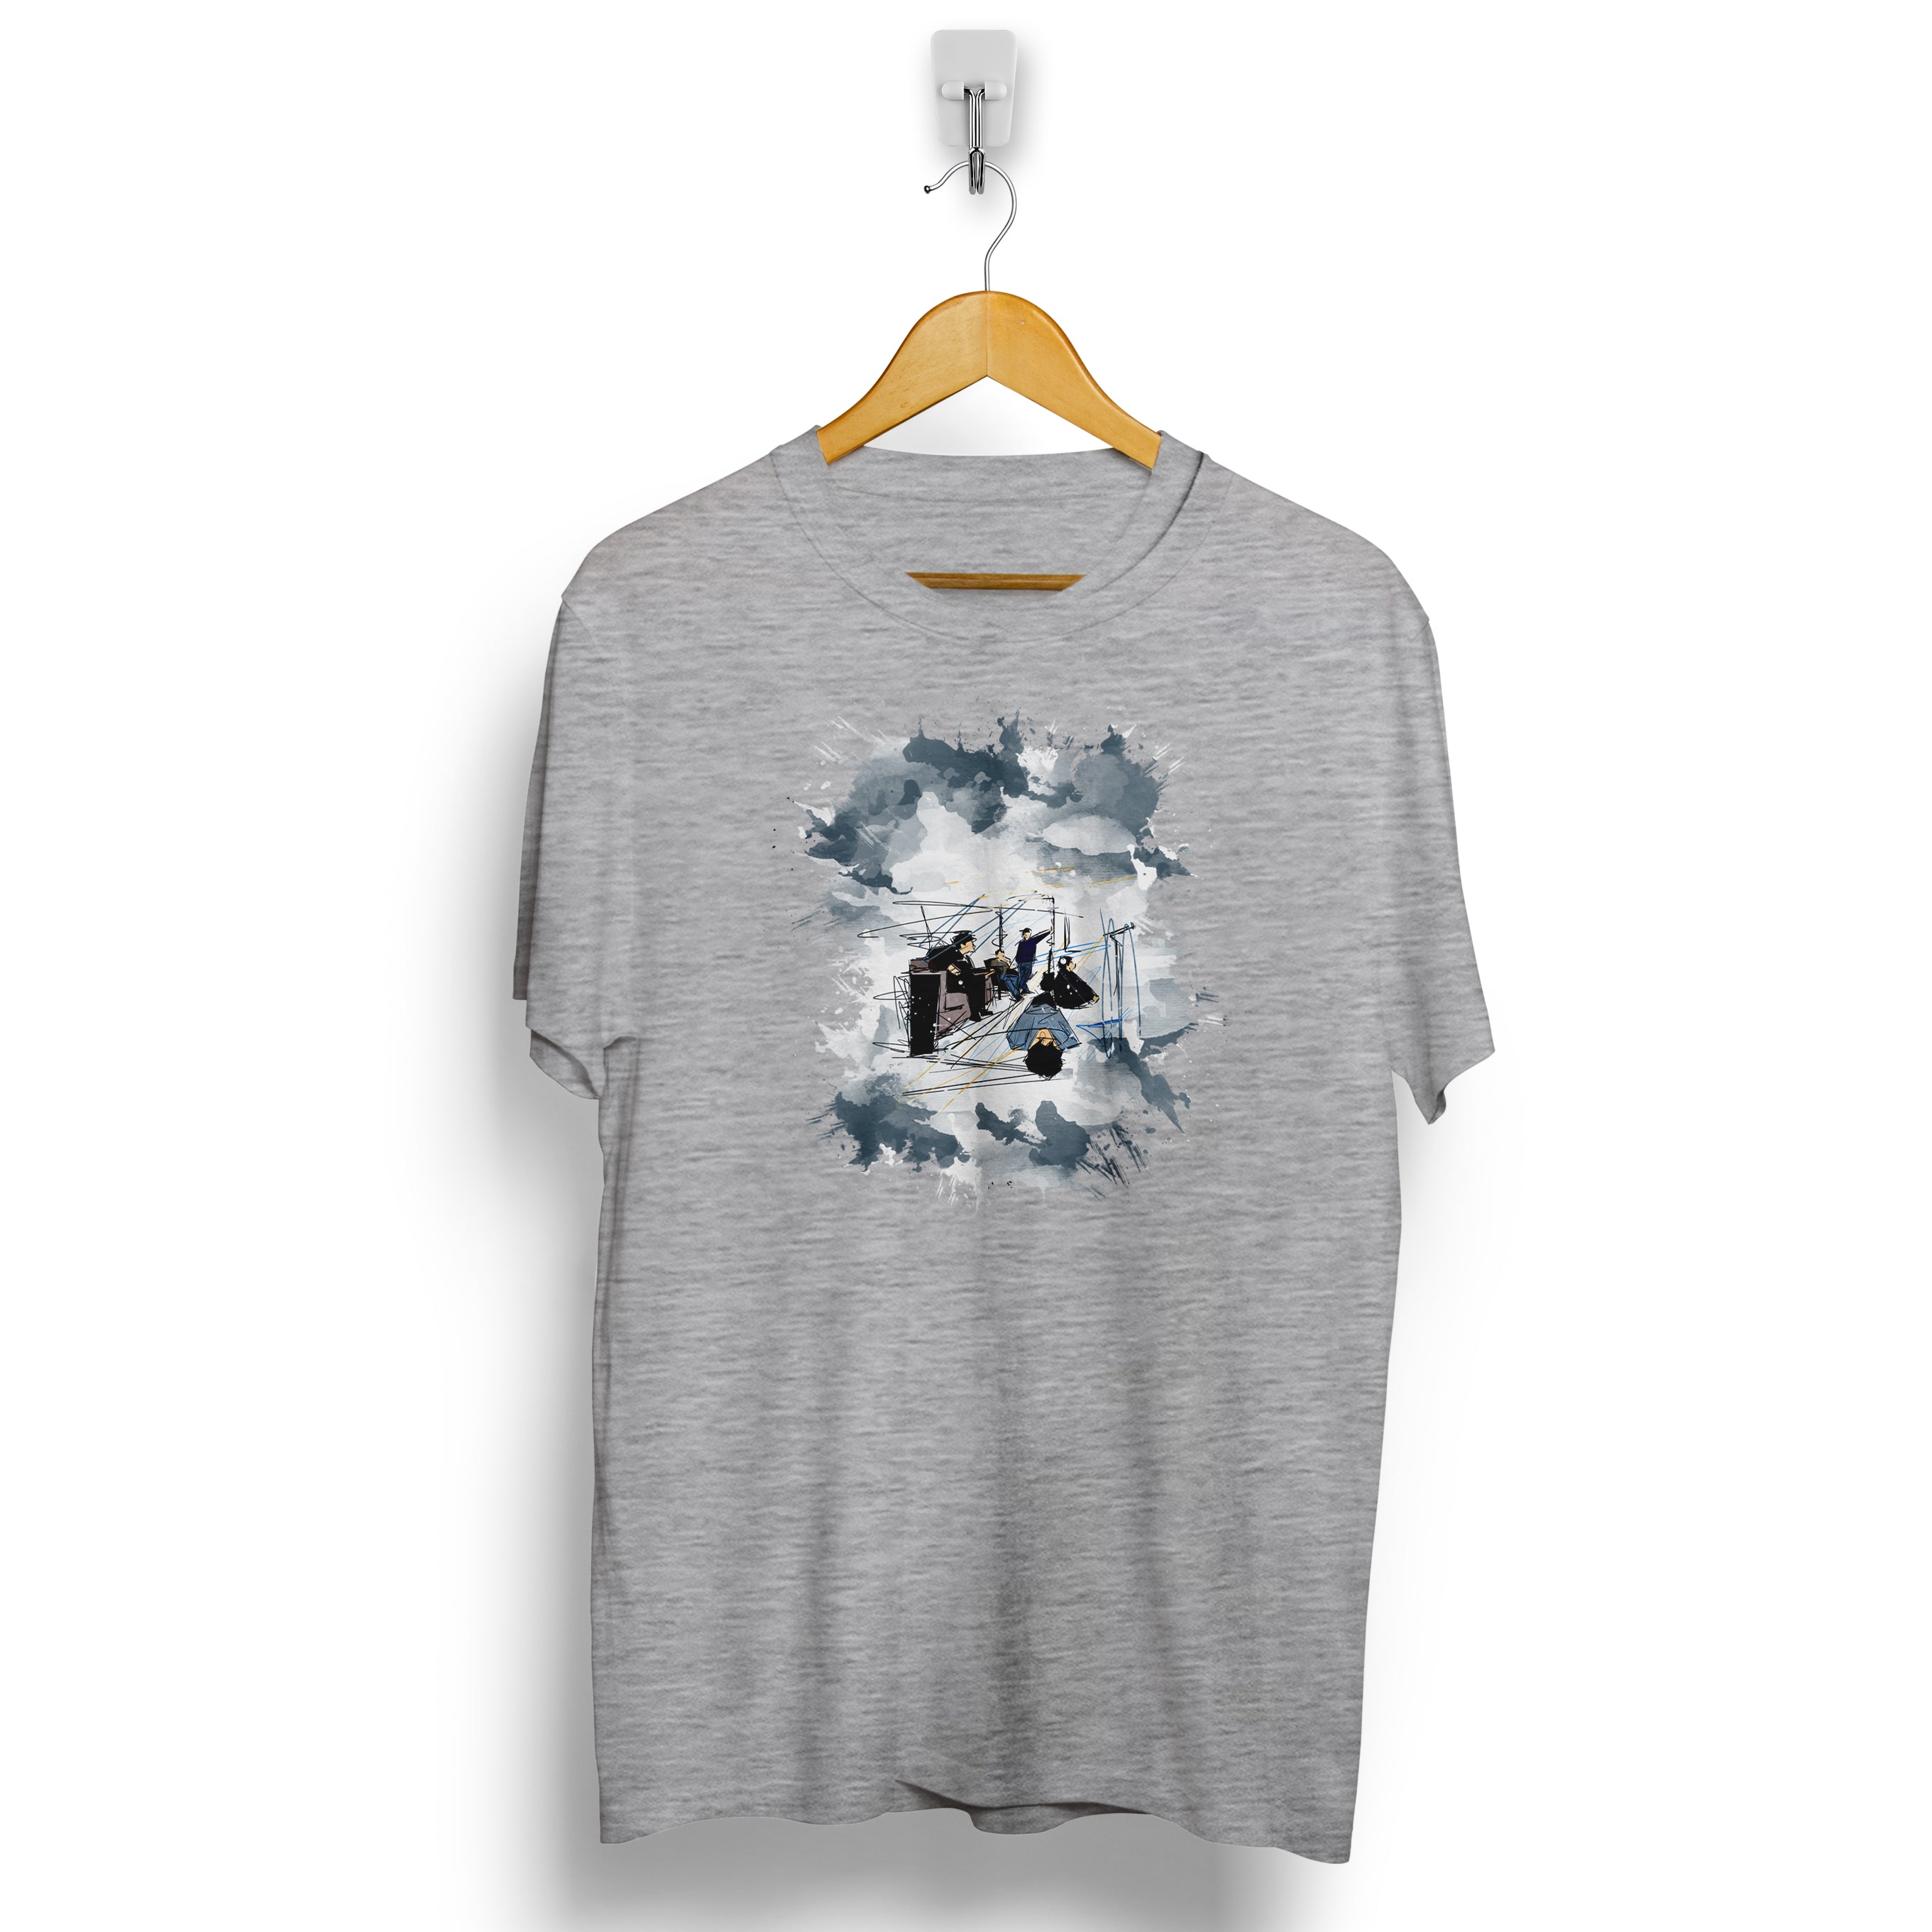 Oasis Themed Fine Art Gig  Shirt